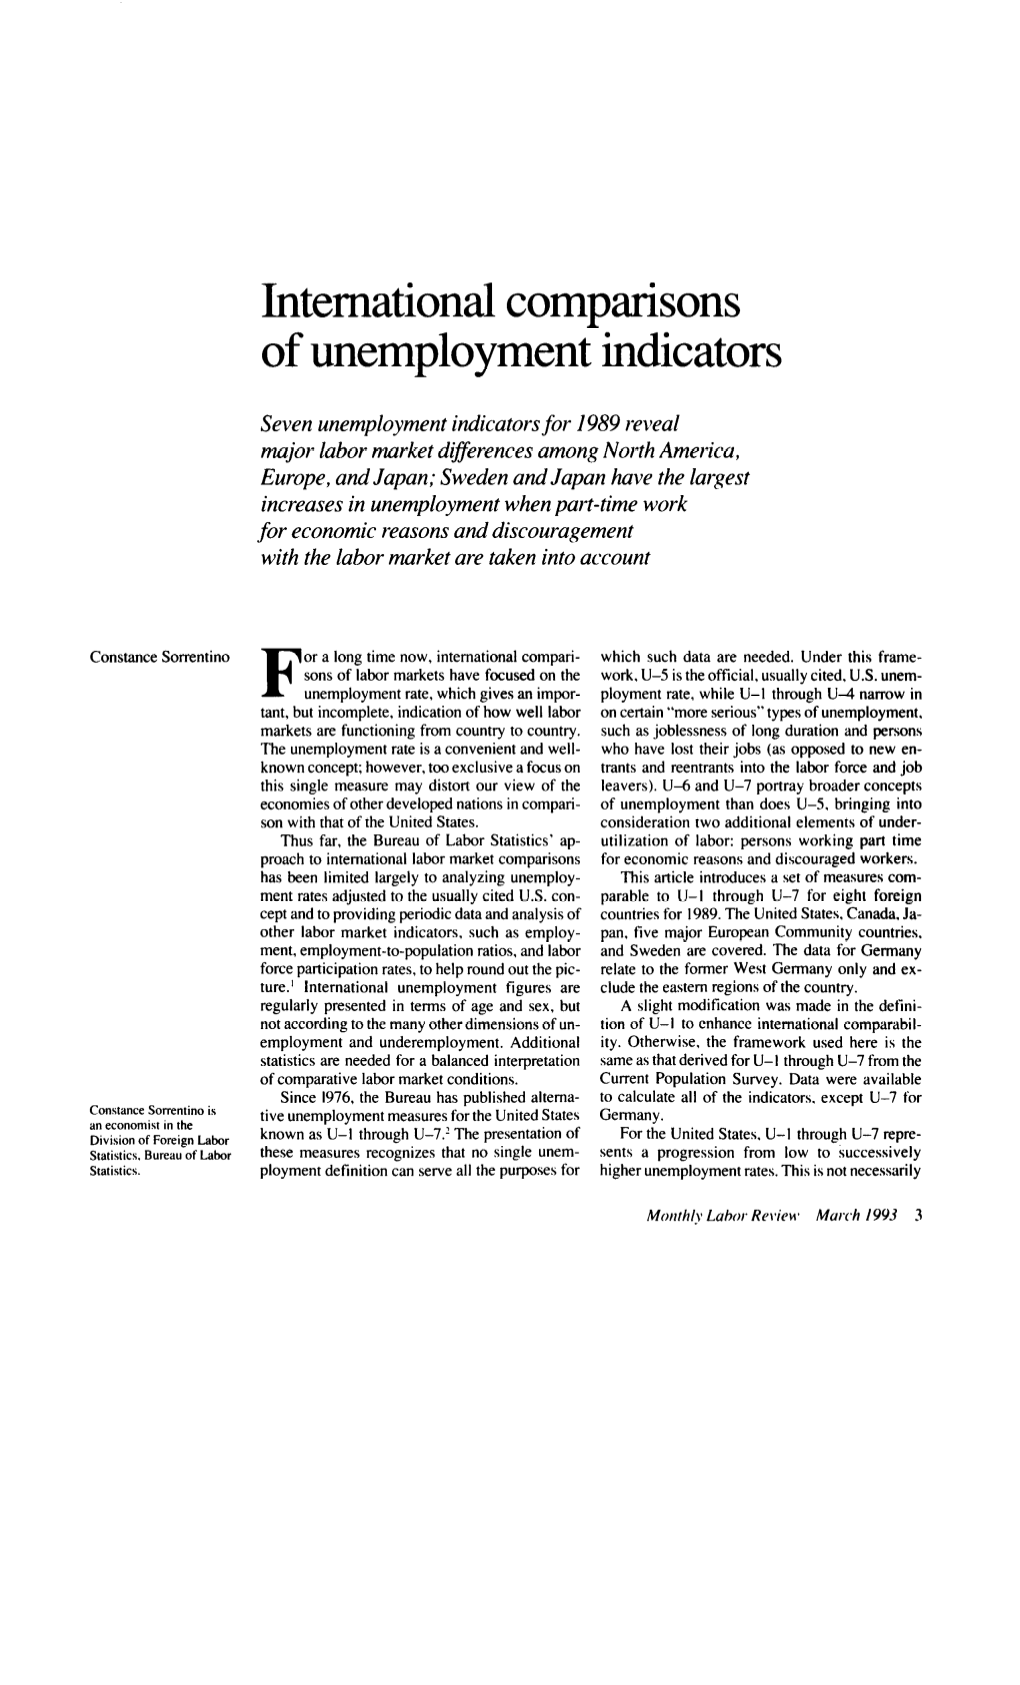 International Comparisons of Unemployment Indicators